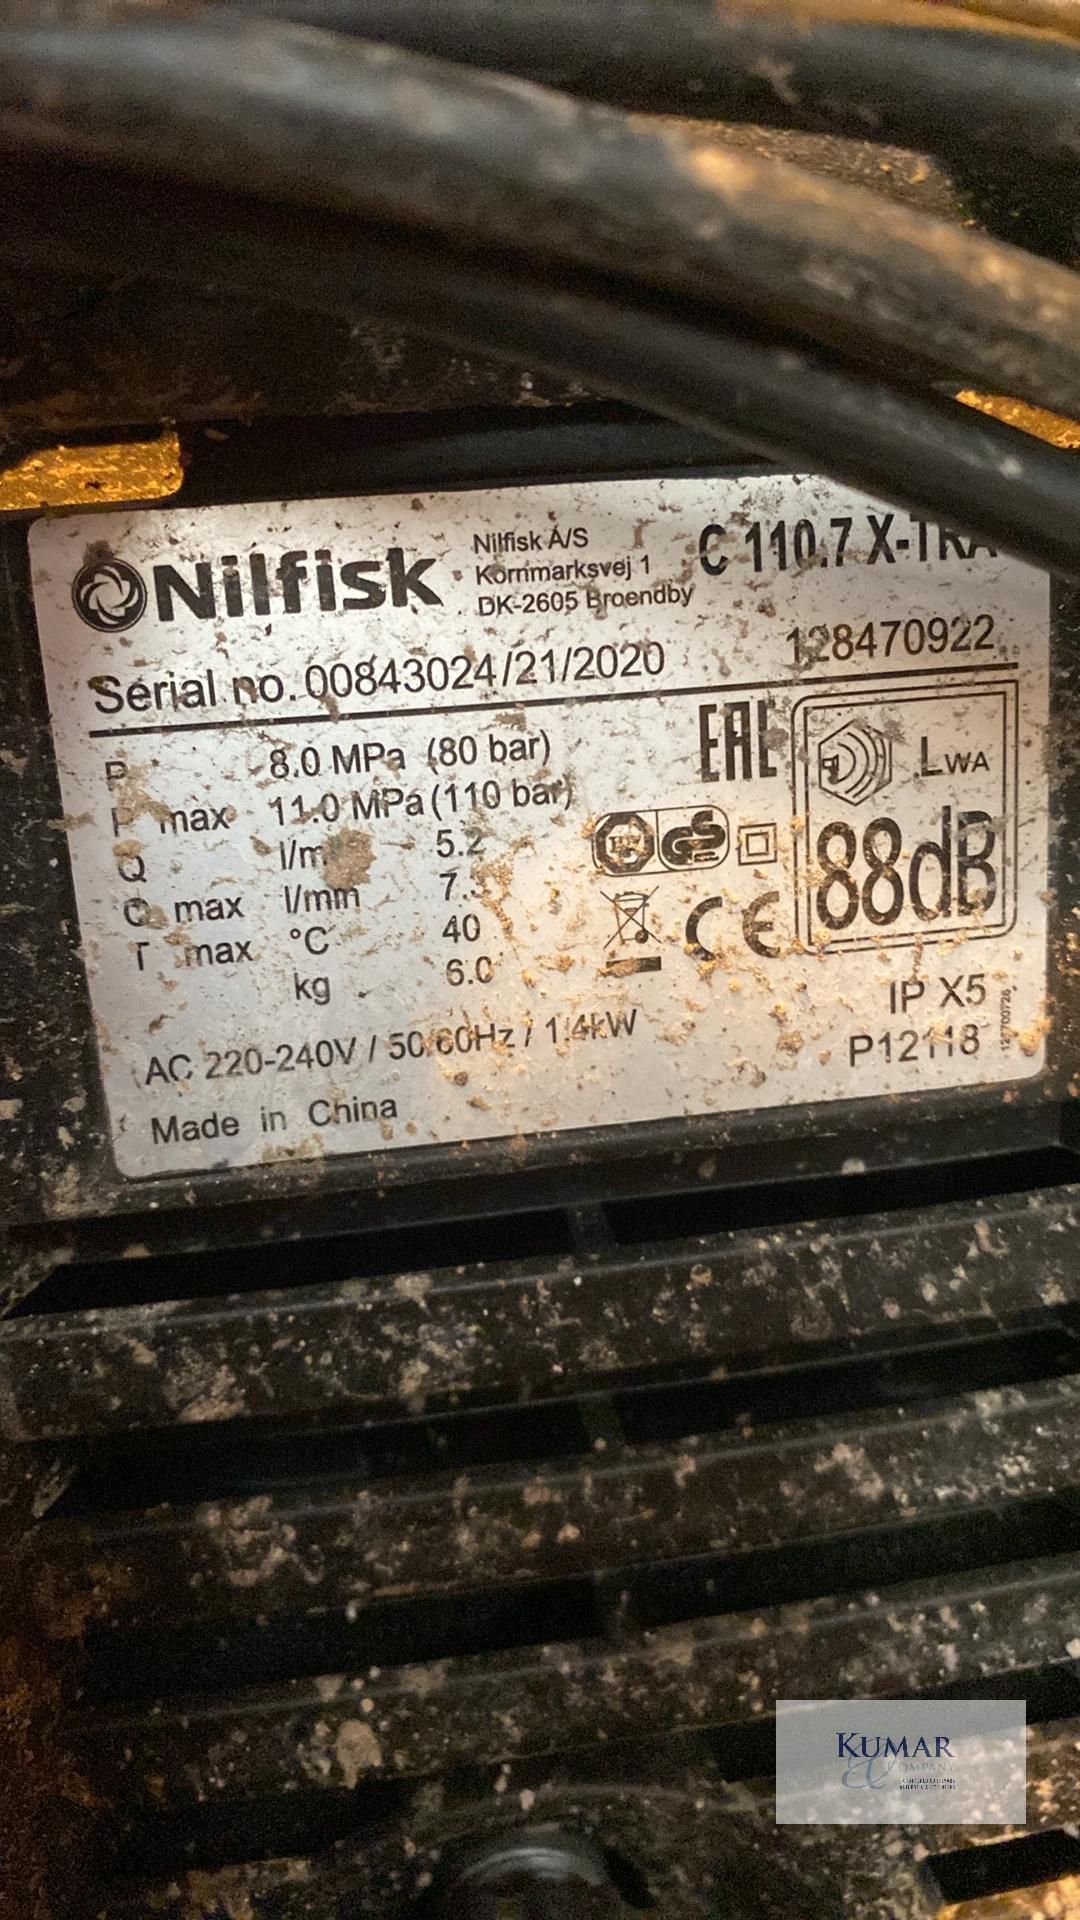 Nilfisk C120.7 power washer - Image 5 of 7